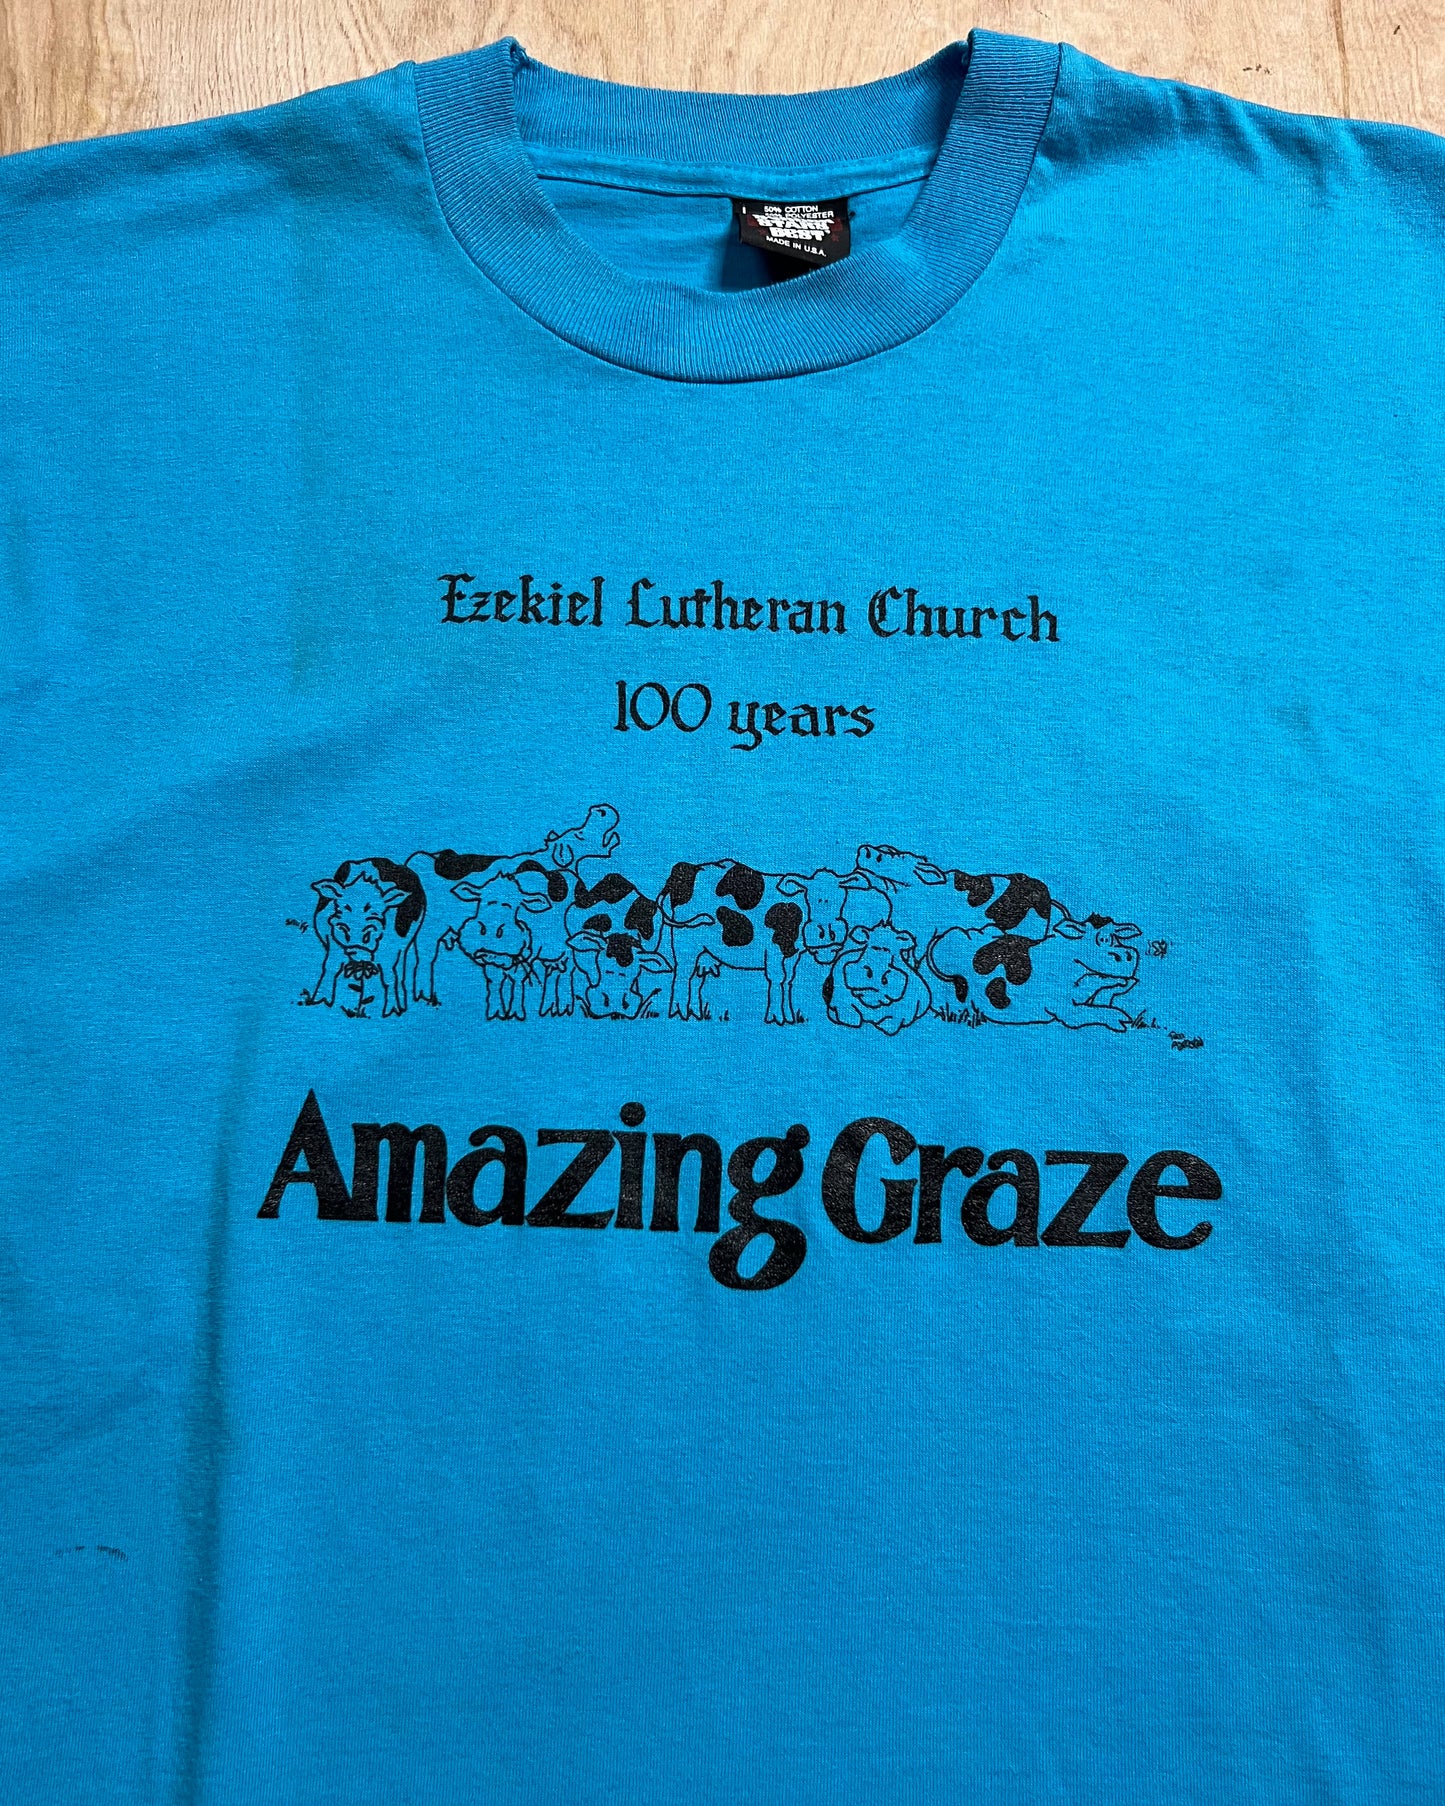 Early 1990's "Amazing Graze" Screen Stars Single Stitch T-Shirt